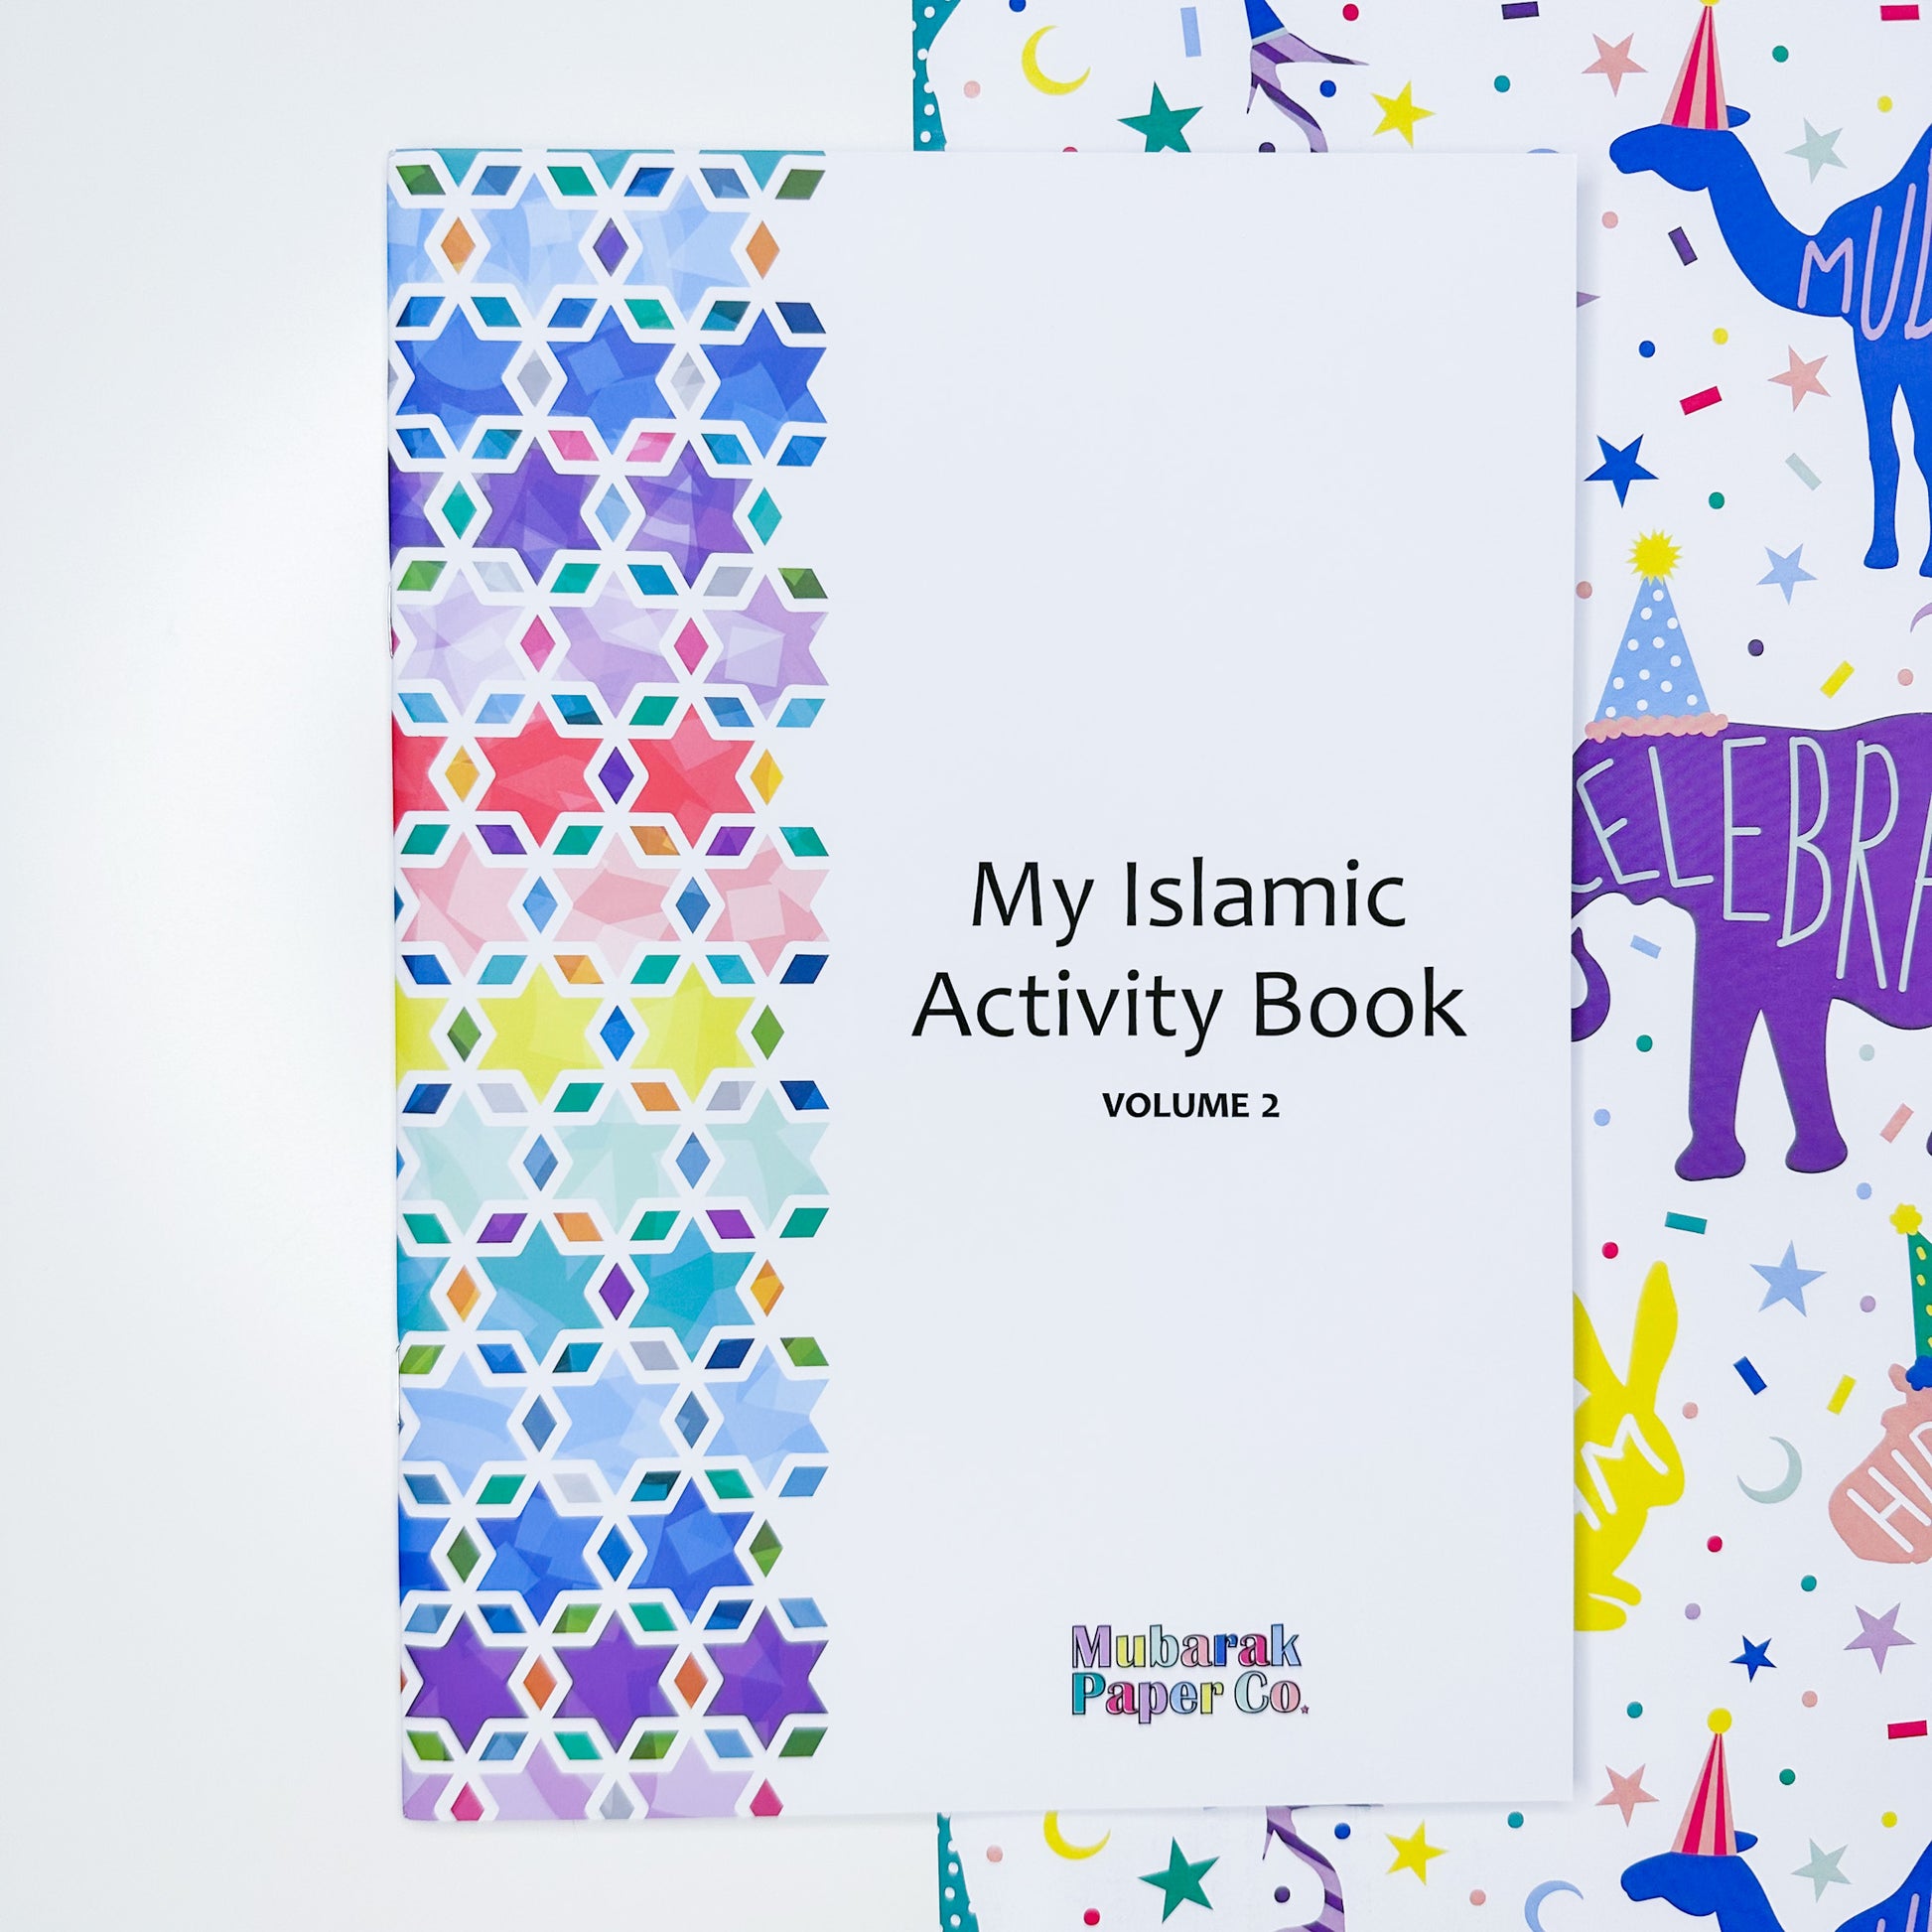 Ramadan Coloring Book